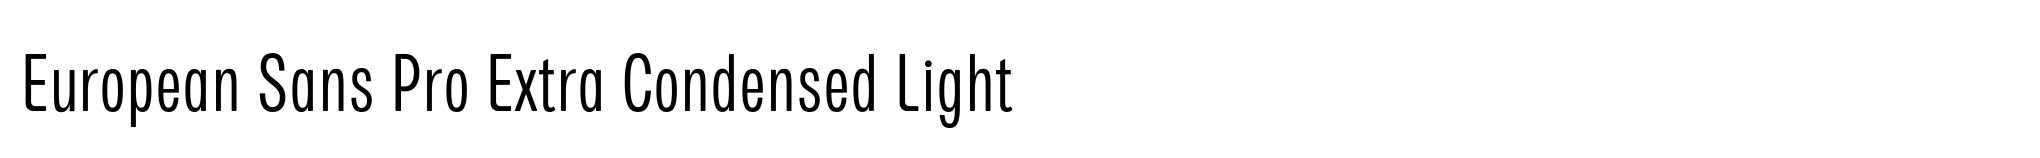 European Sans Pro Extra Condensed Light image